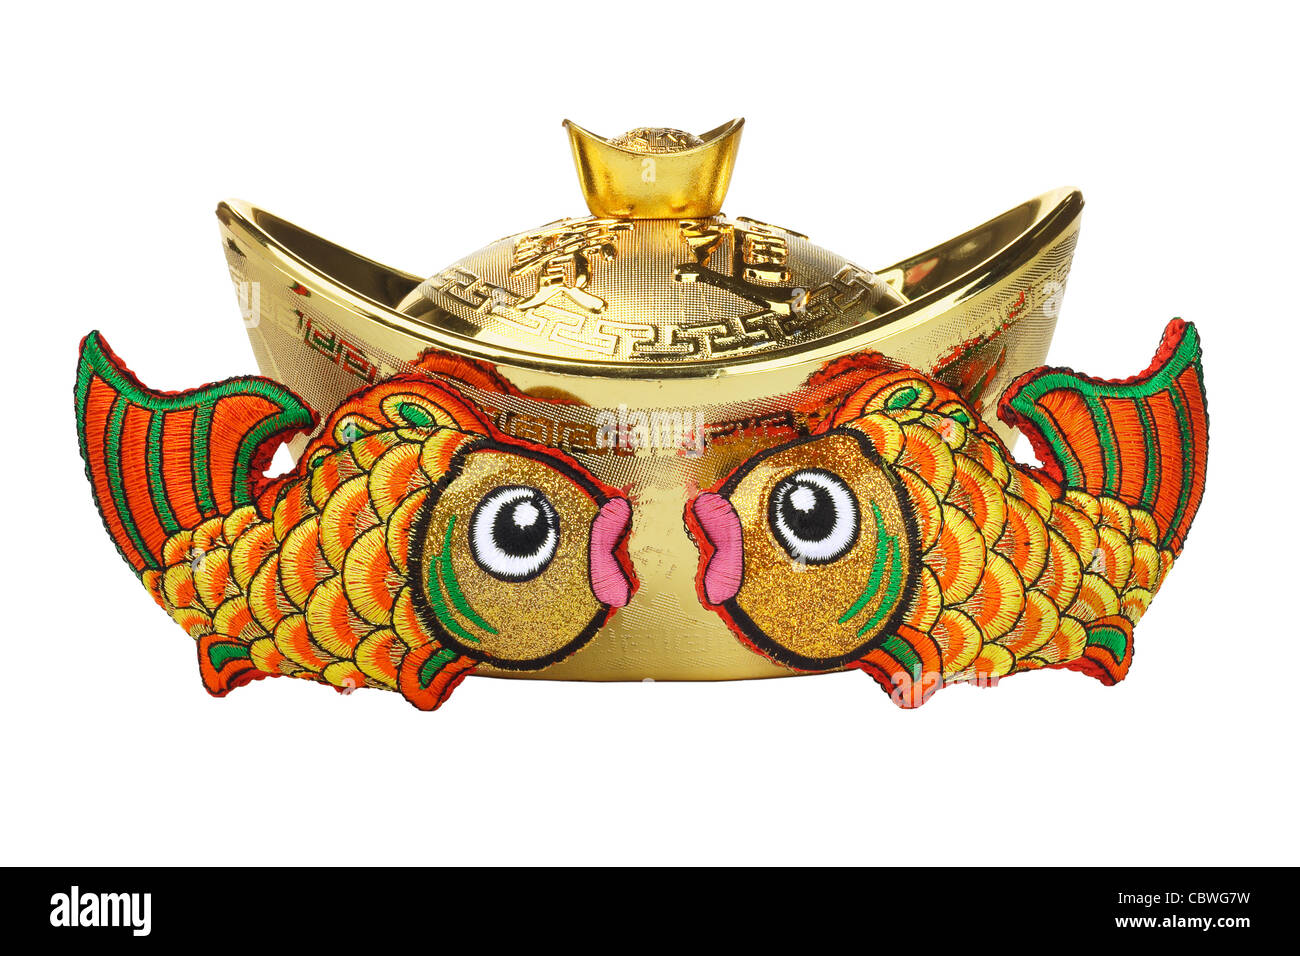 Chinese new year gold ingot and auspicious carp ornaments on white background Stock Photo